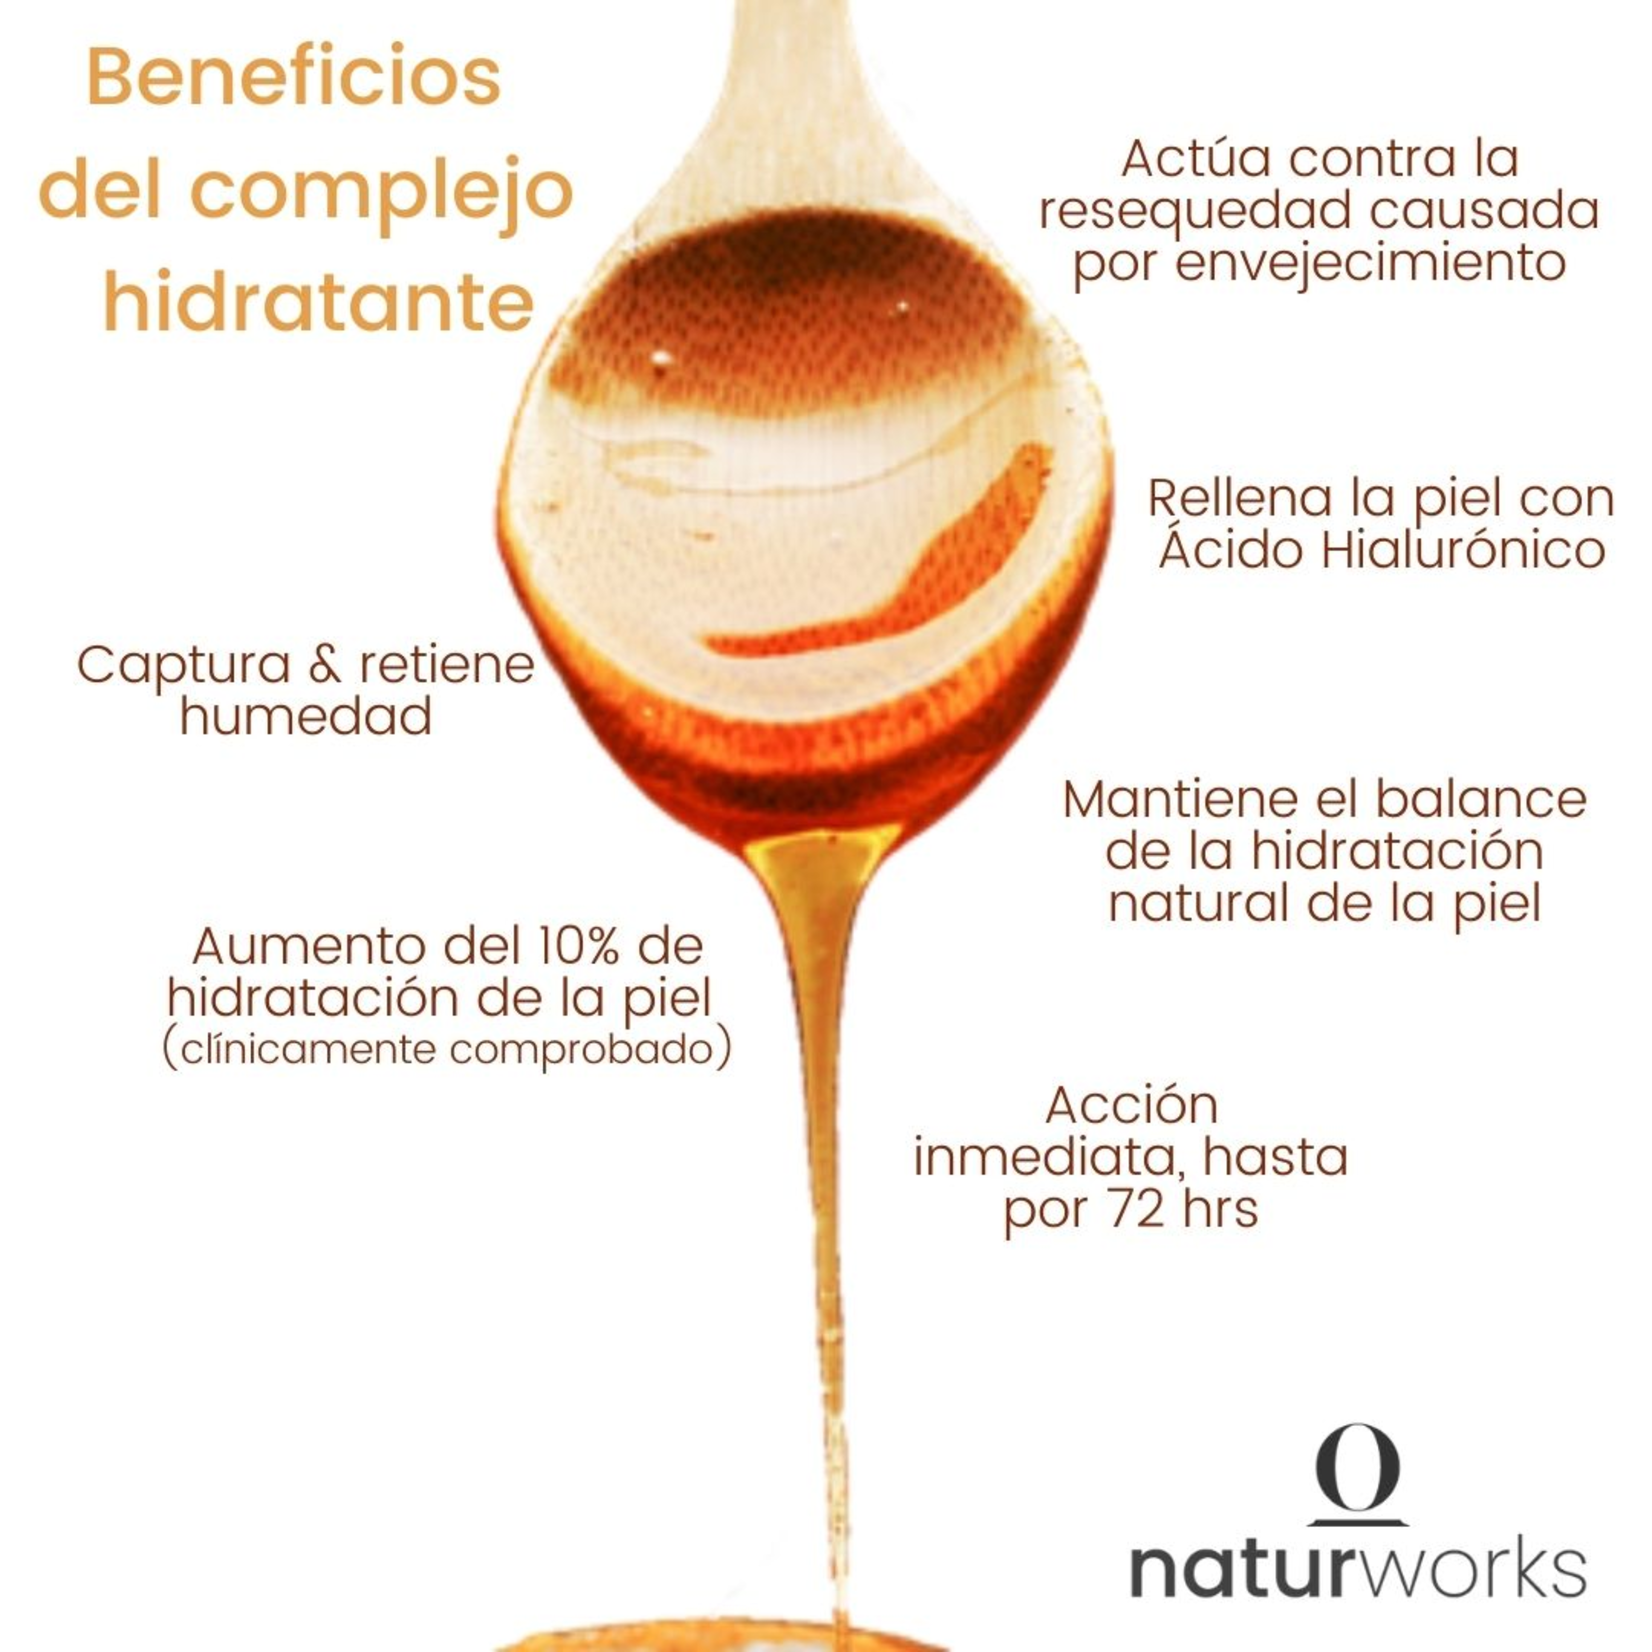 Naturworks Shampoo solido Naturworks Bomba hidratante acido hialuronico, pro vitamina B5 y extracto frutal 100 gr